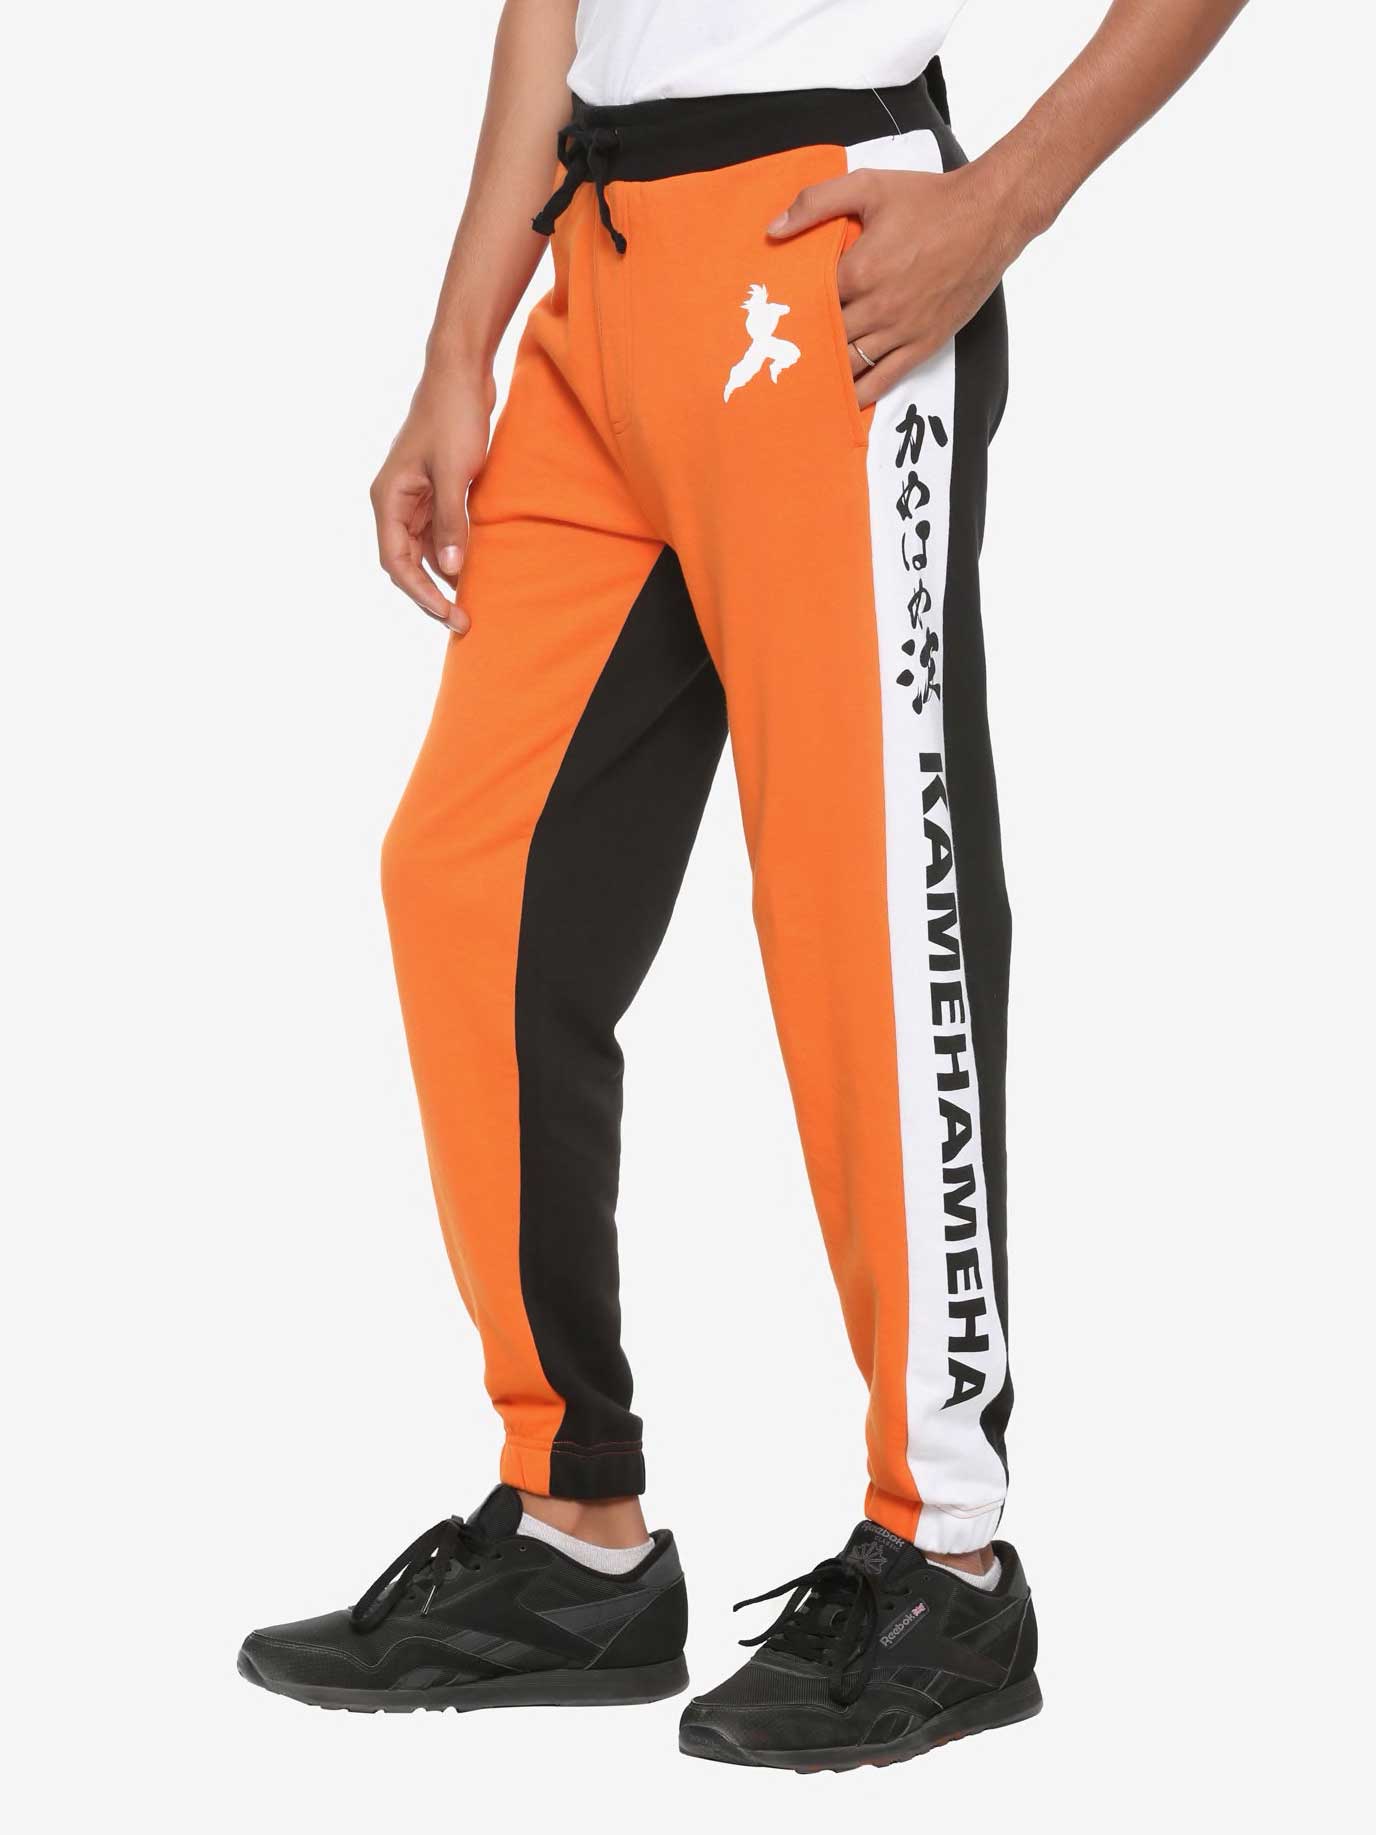 Orange and White athletic pants